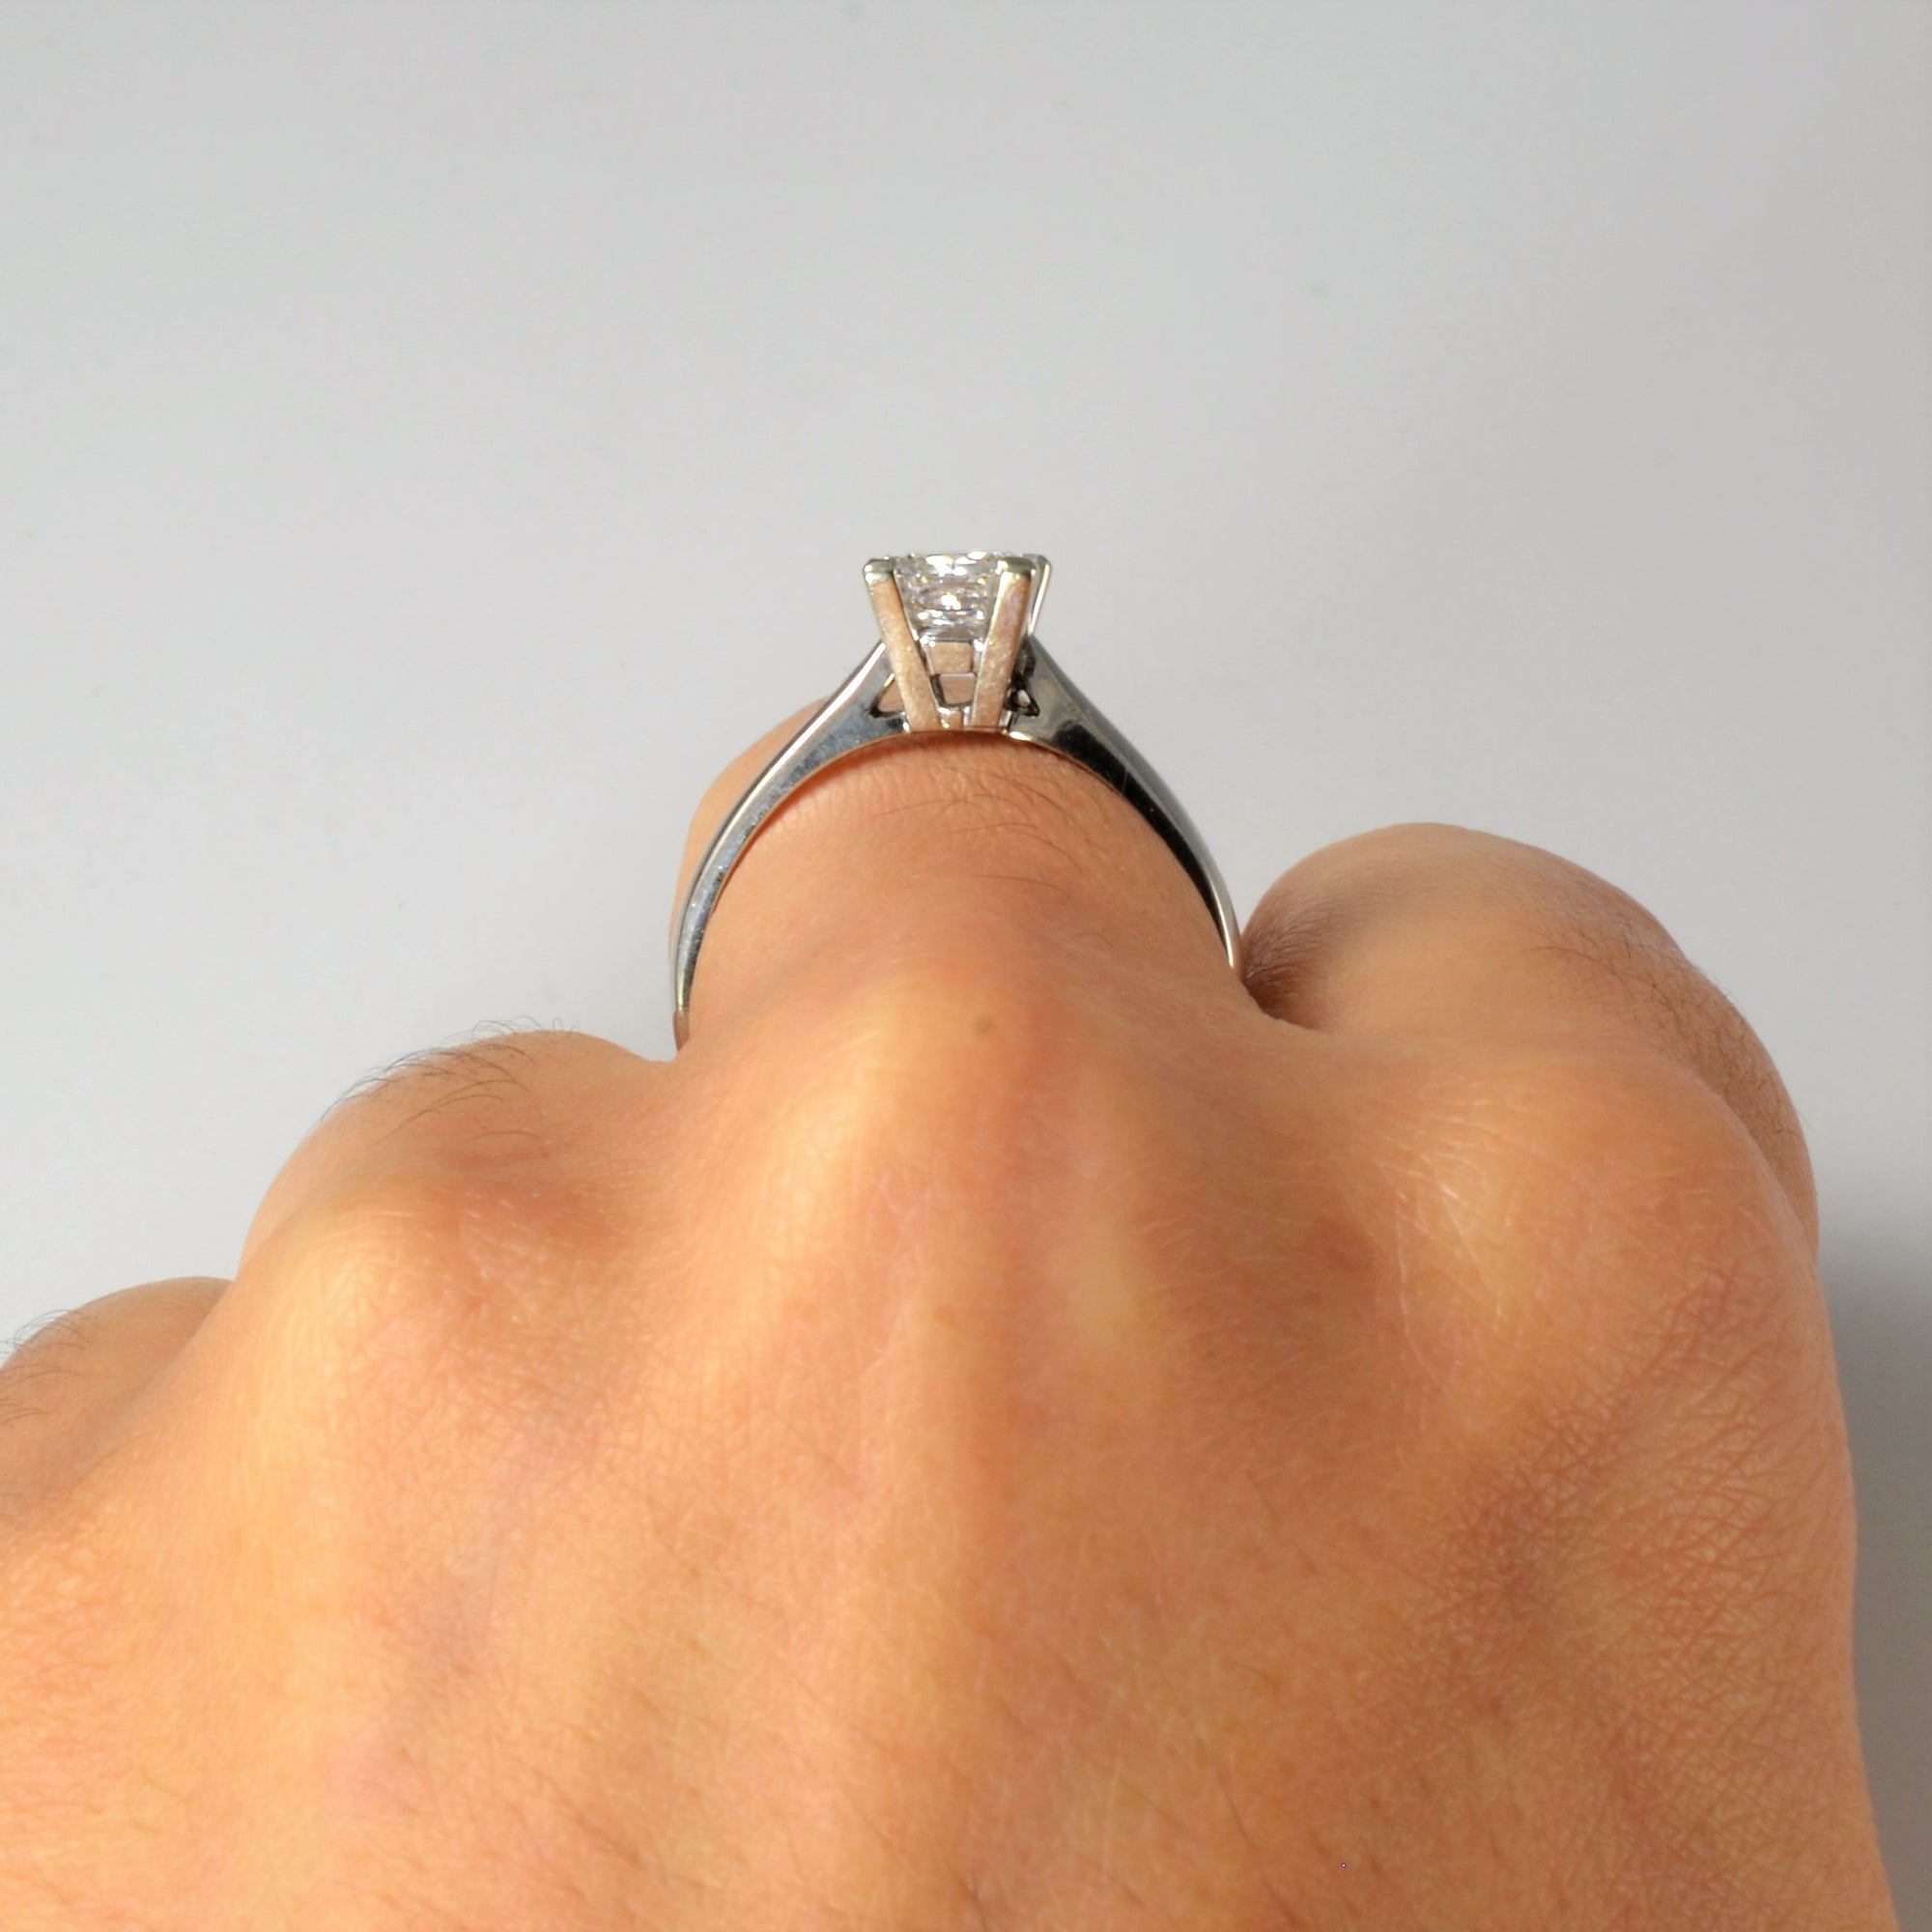 Princess Canadian Diamond Engagement Ring | 1.01ct | SZ 8 |